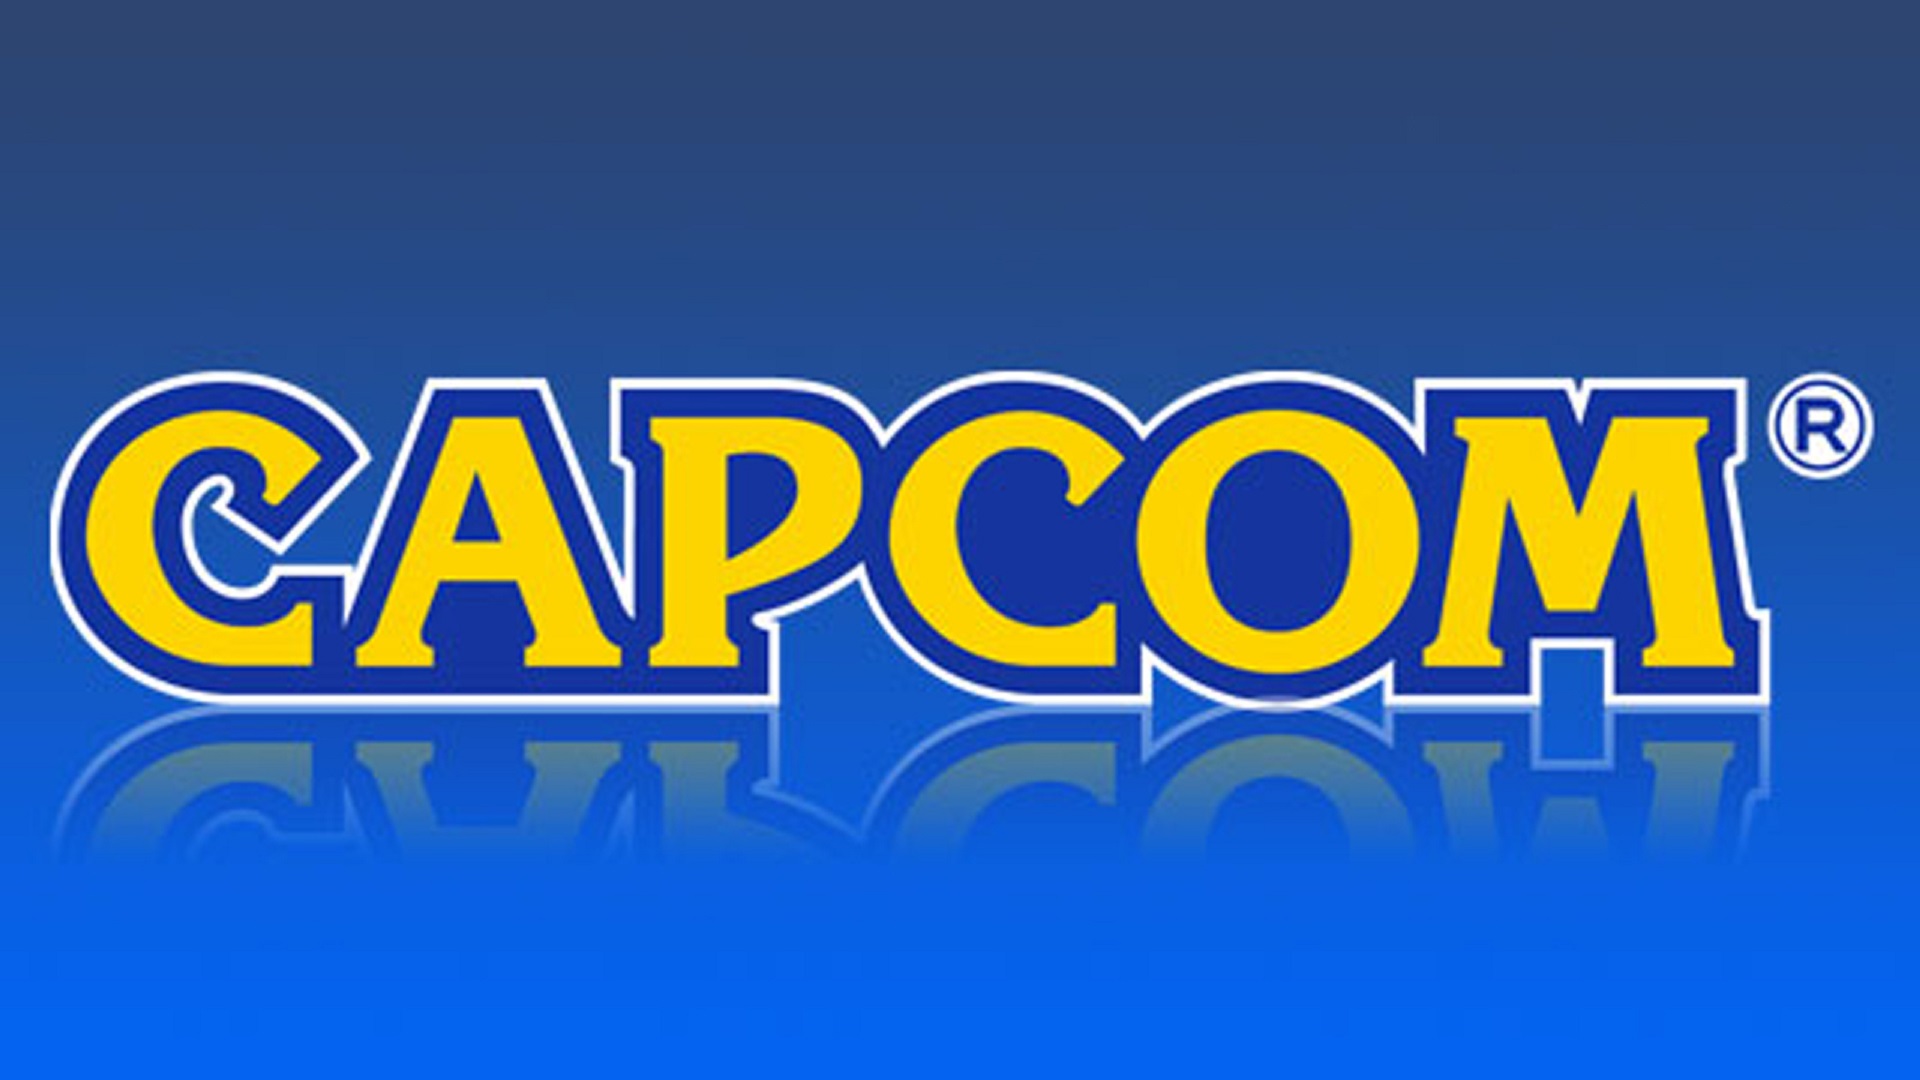 CapcomSpace] - Street Fighter 6 (Análise) - EvilHazard